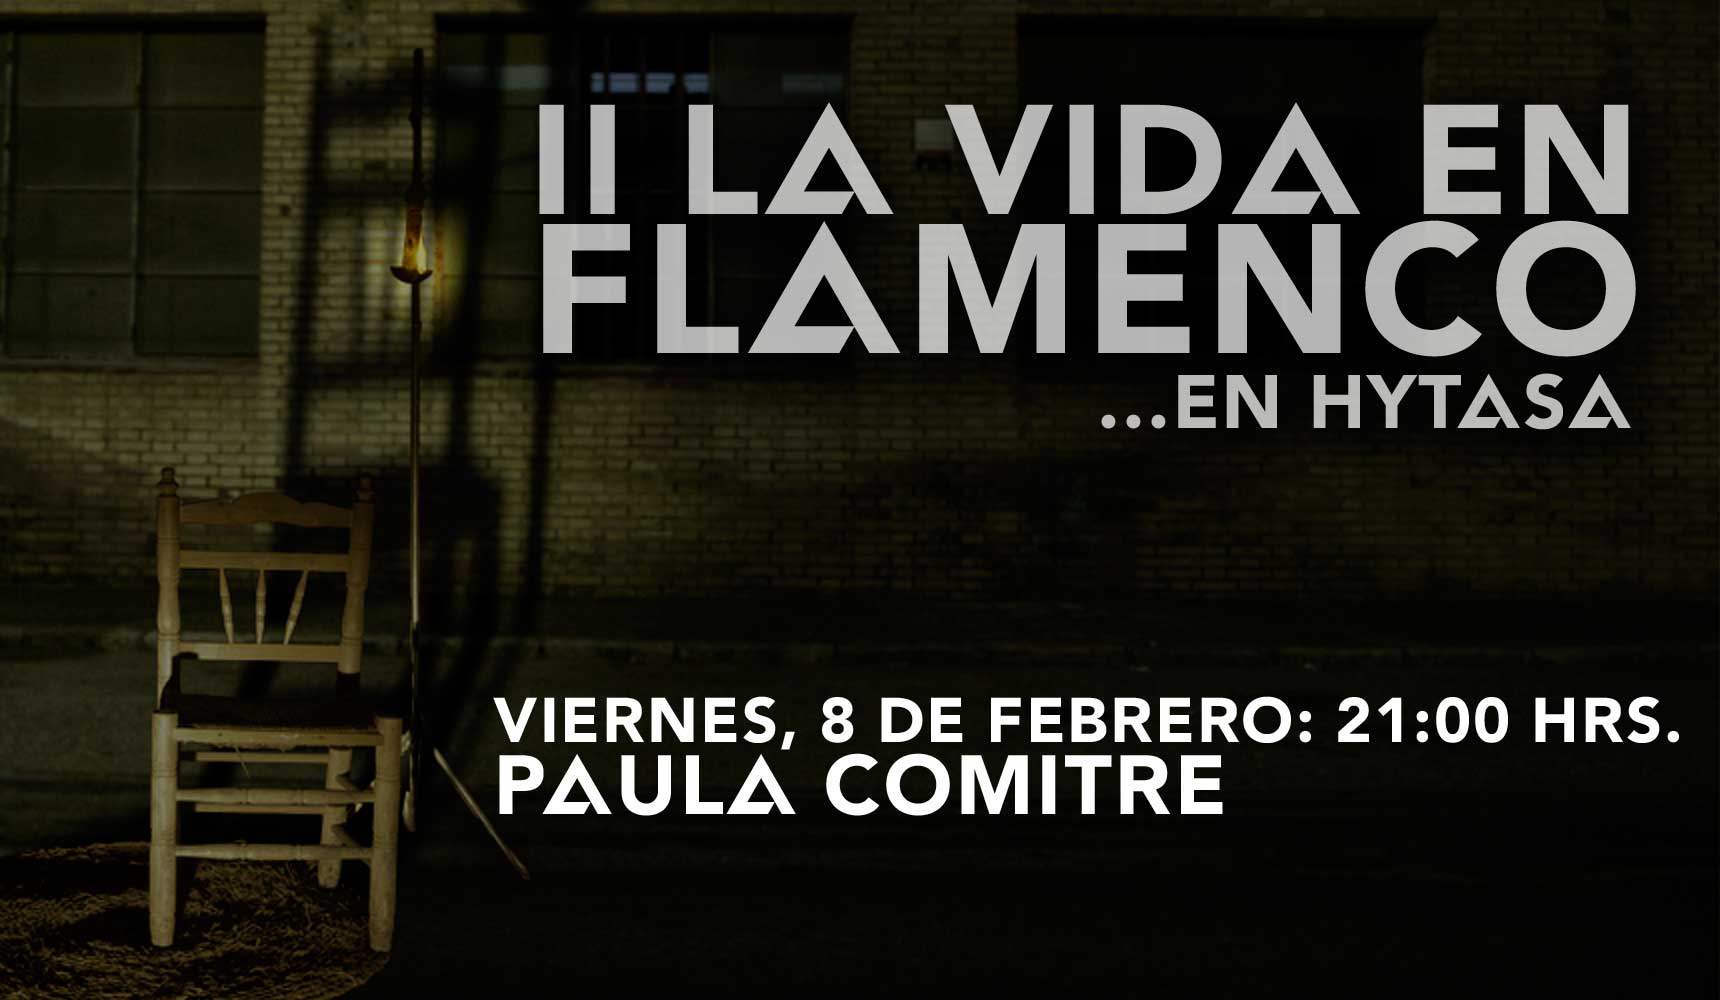 La Vida en Flamenco con Paula Comitre